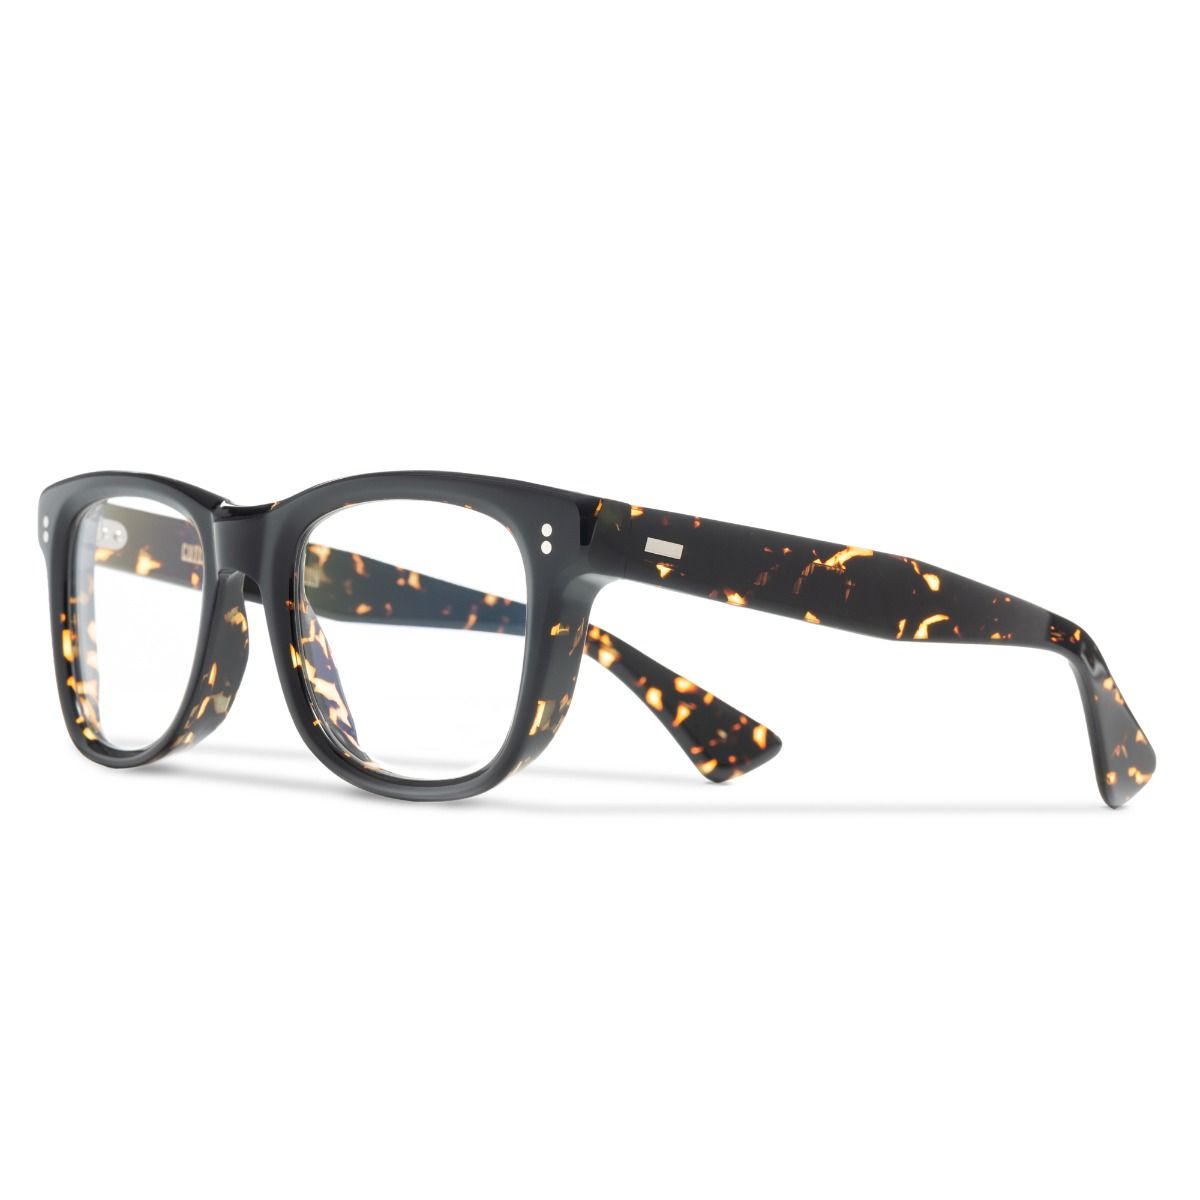 Cutler and Gross, 9101 Optical Square Glasses - Black on Havana